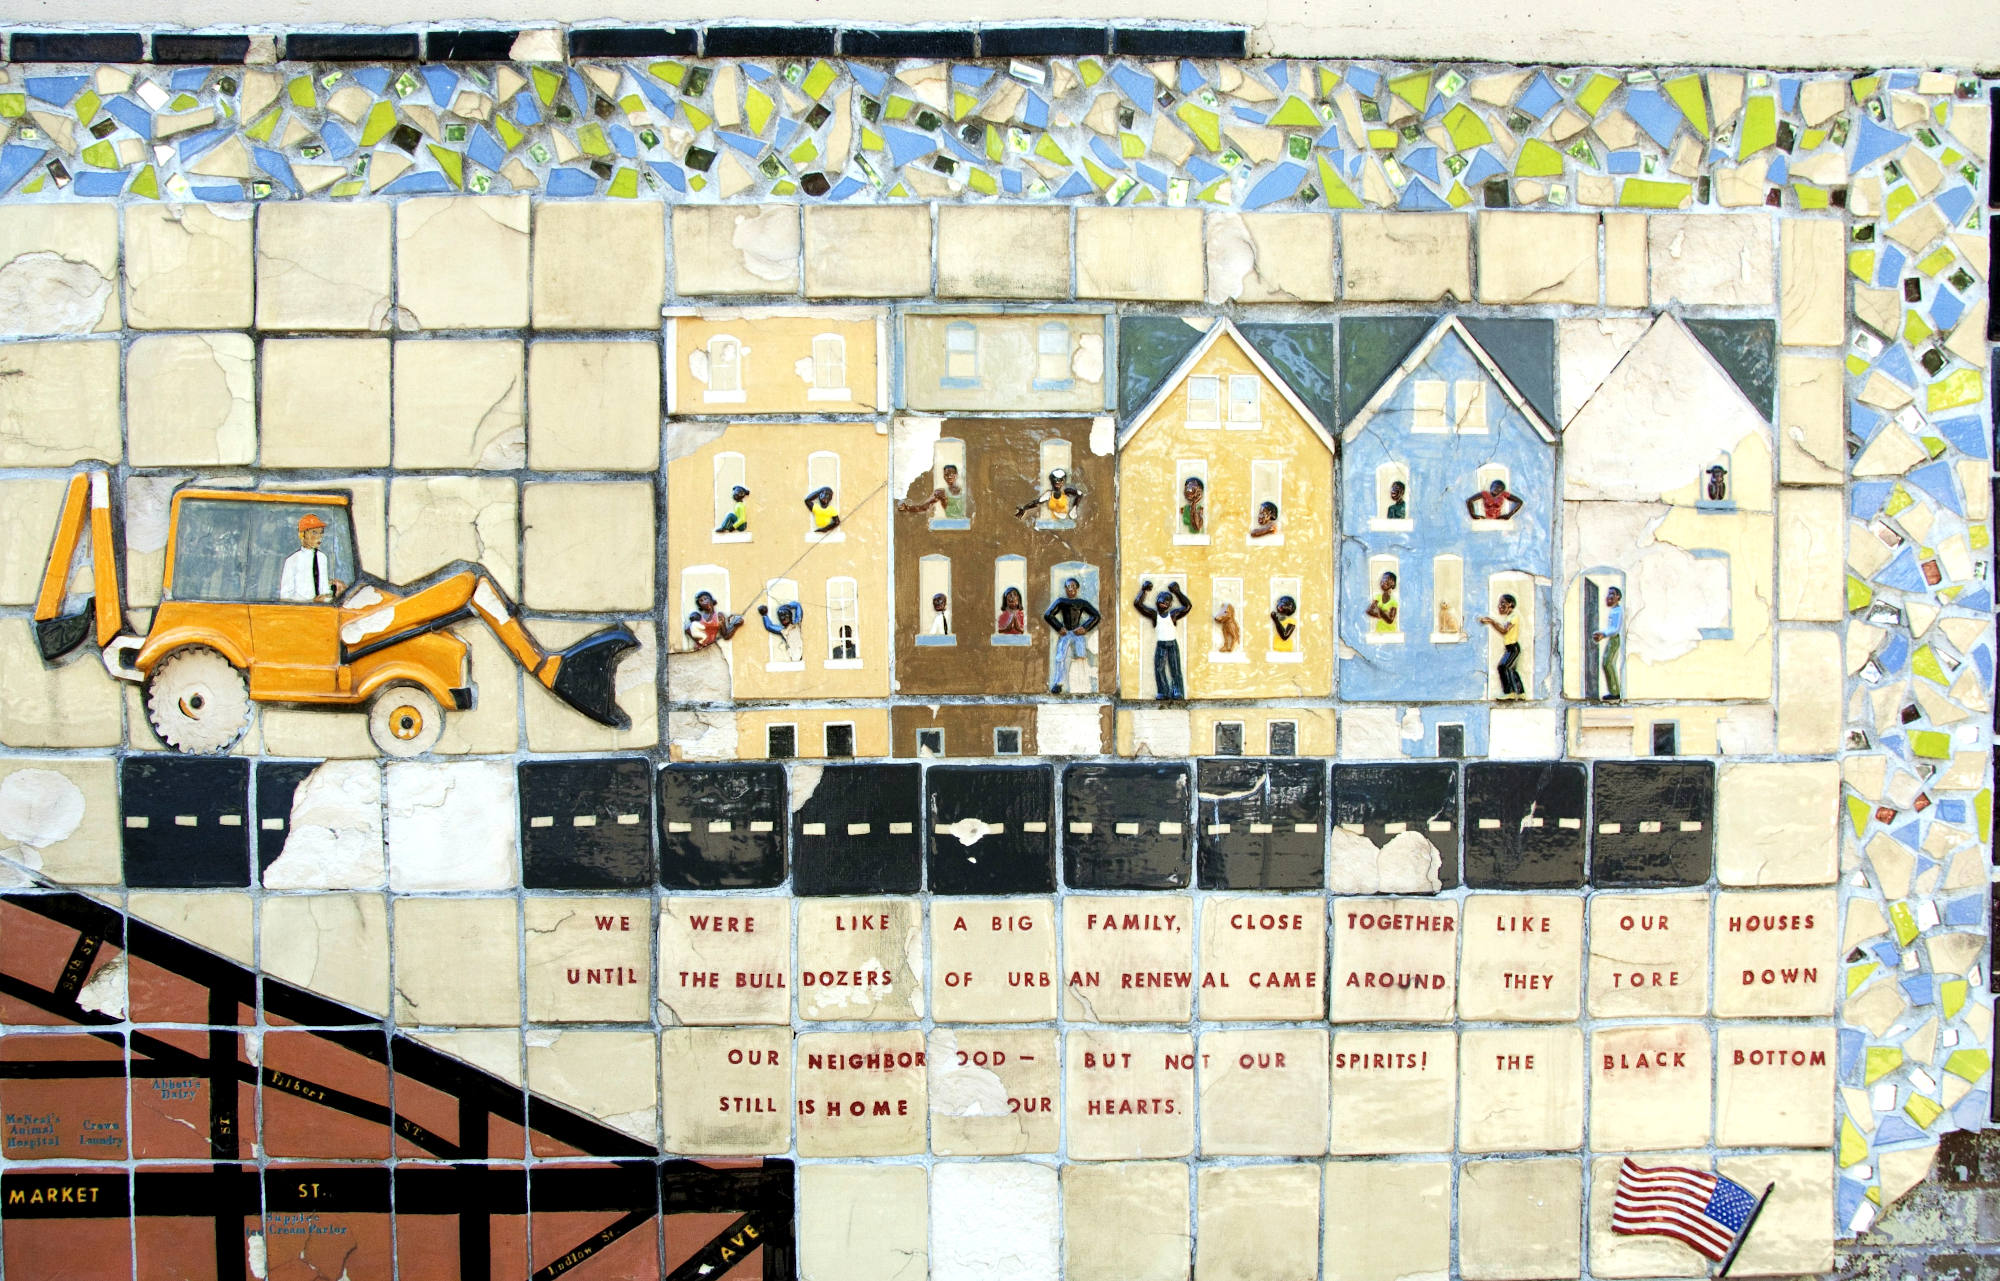 Mosaic of the Black Bottom Neighborhood